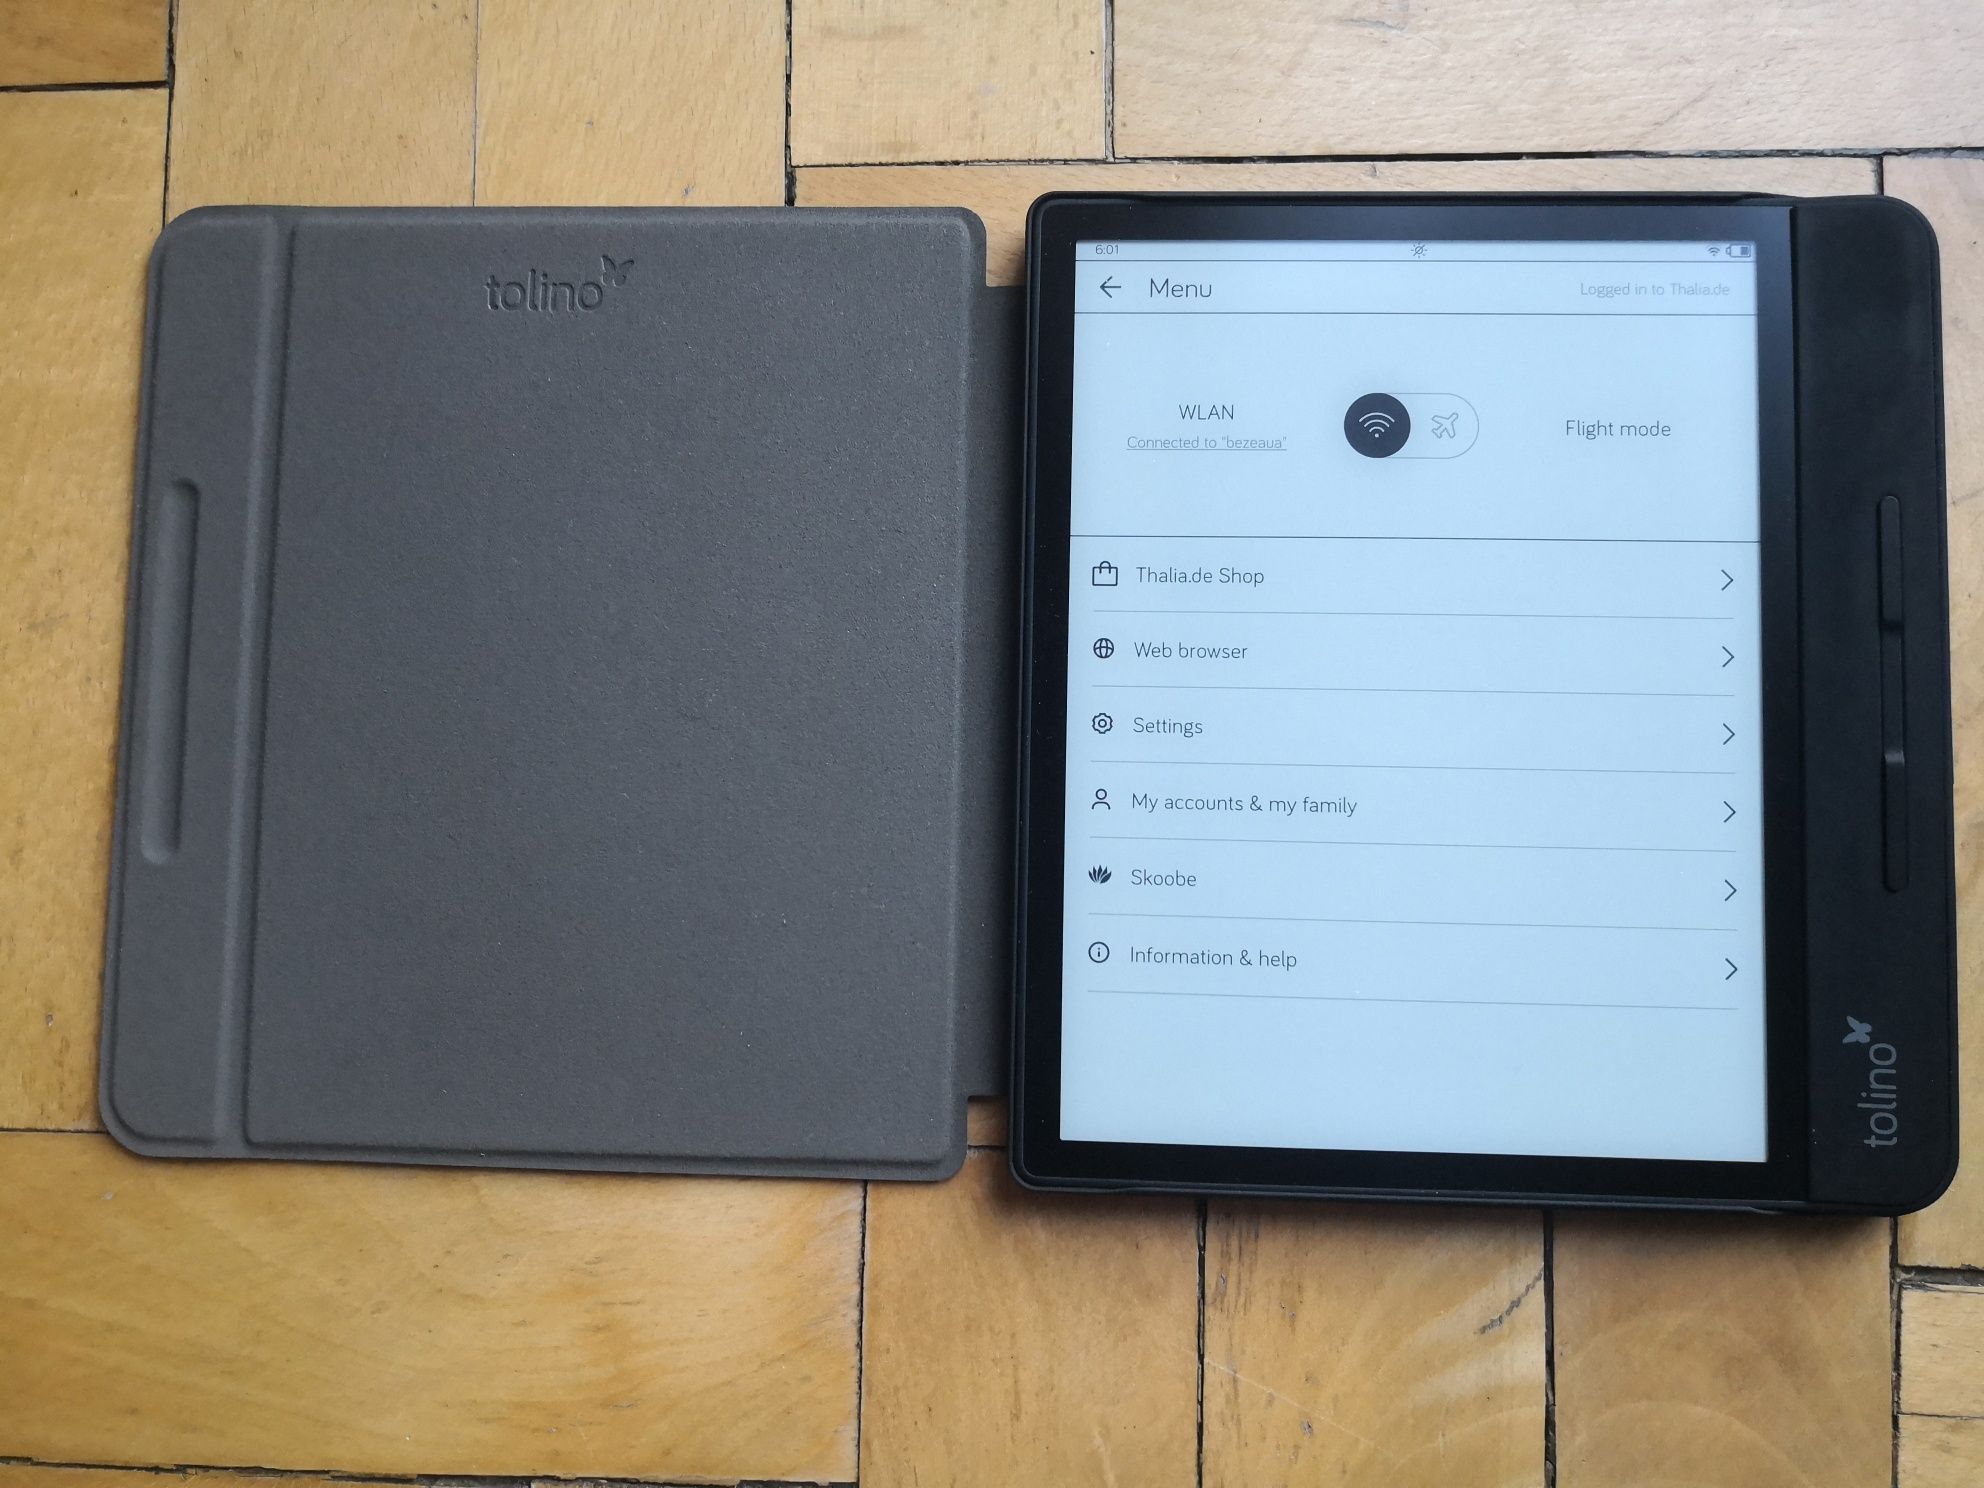 Tolino Epos 2 - Kobo Forma 8 inch E reader ereader ca Kindle